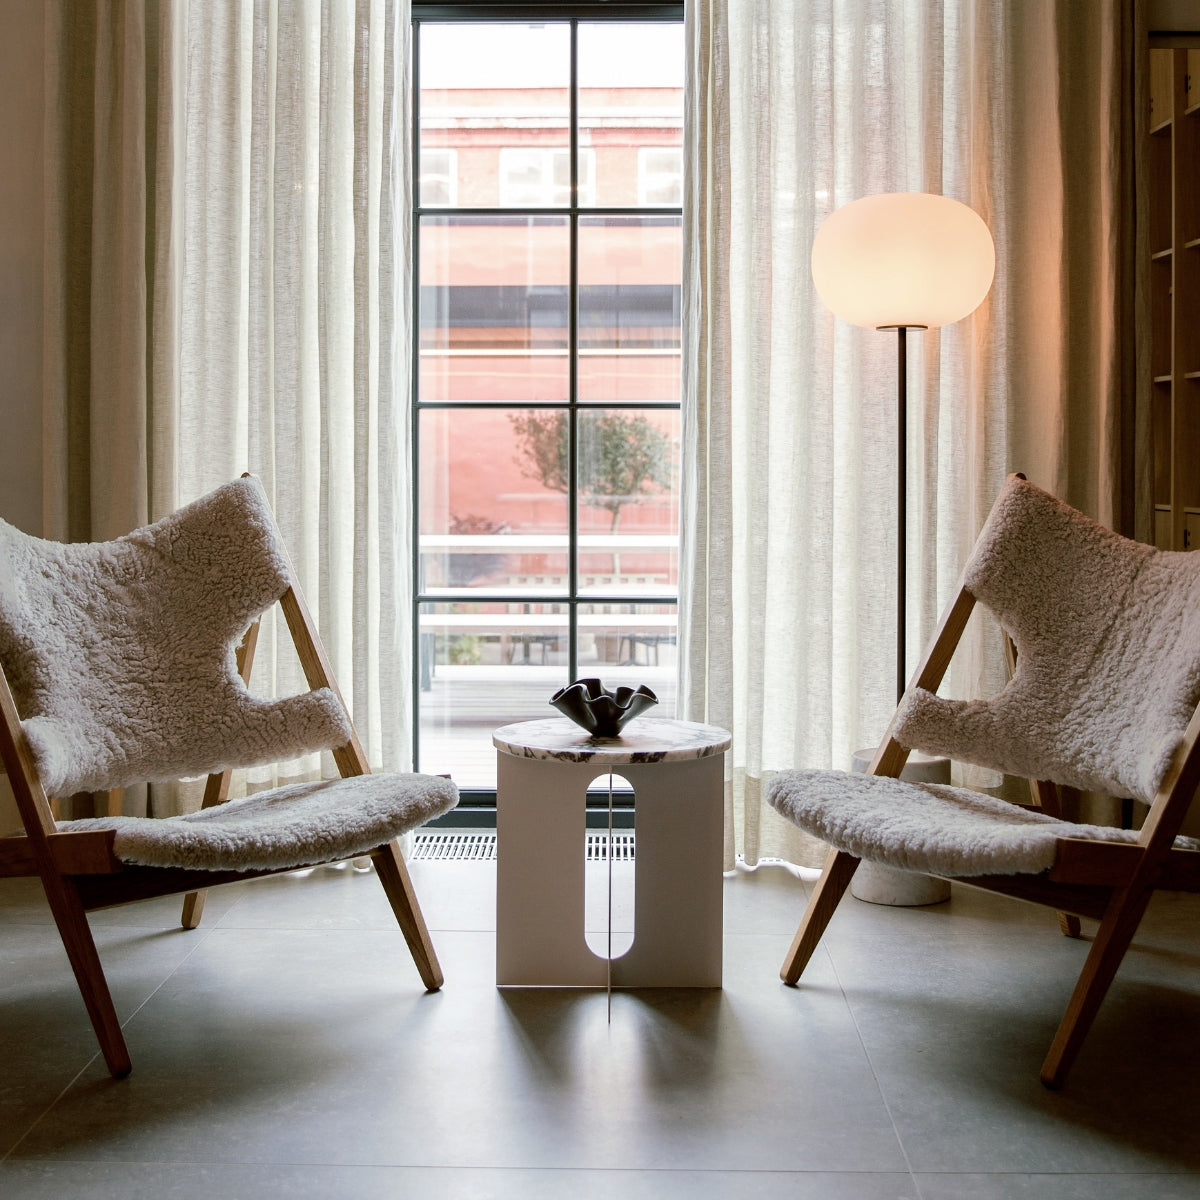 Audo Copenhagen | Knitting Lounge Chair - Oak, Nature Sheepskin